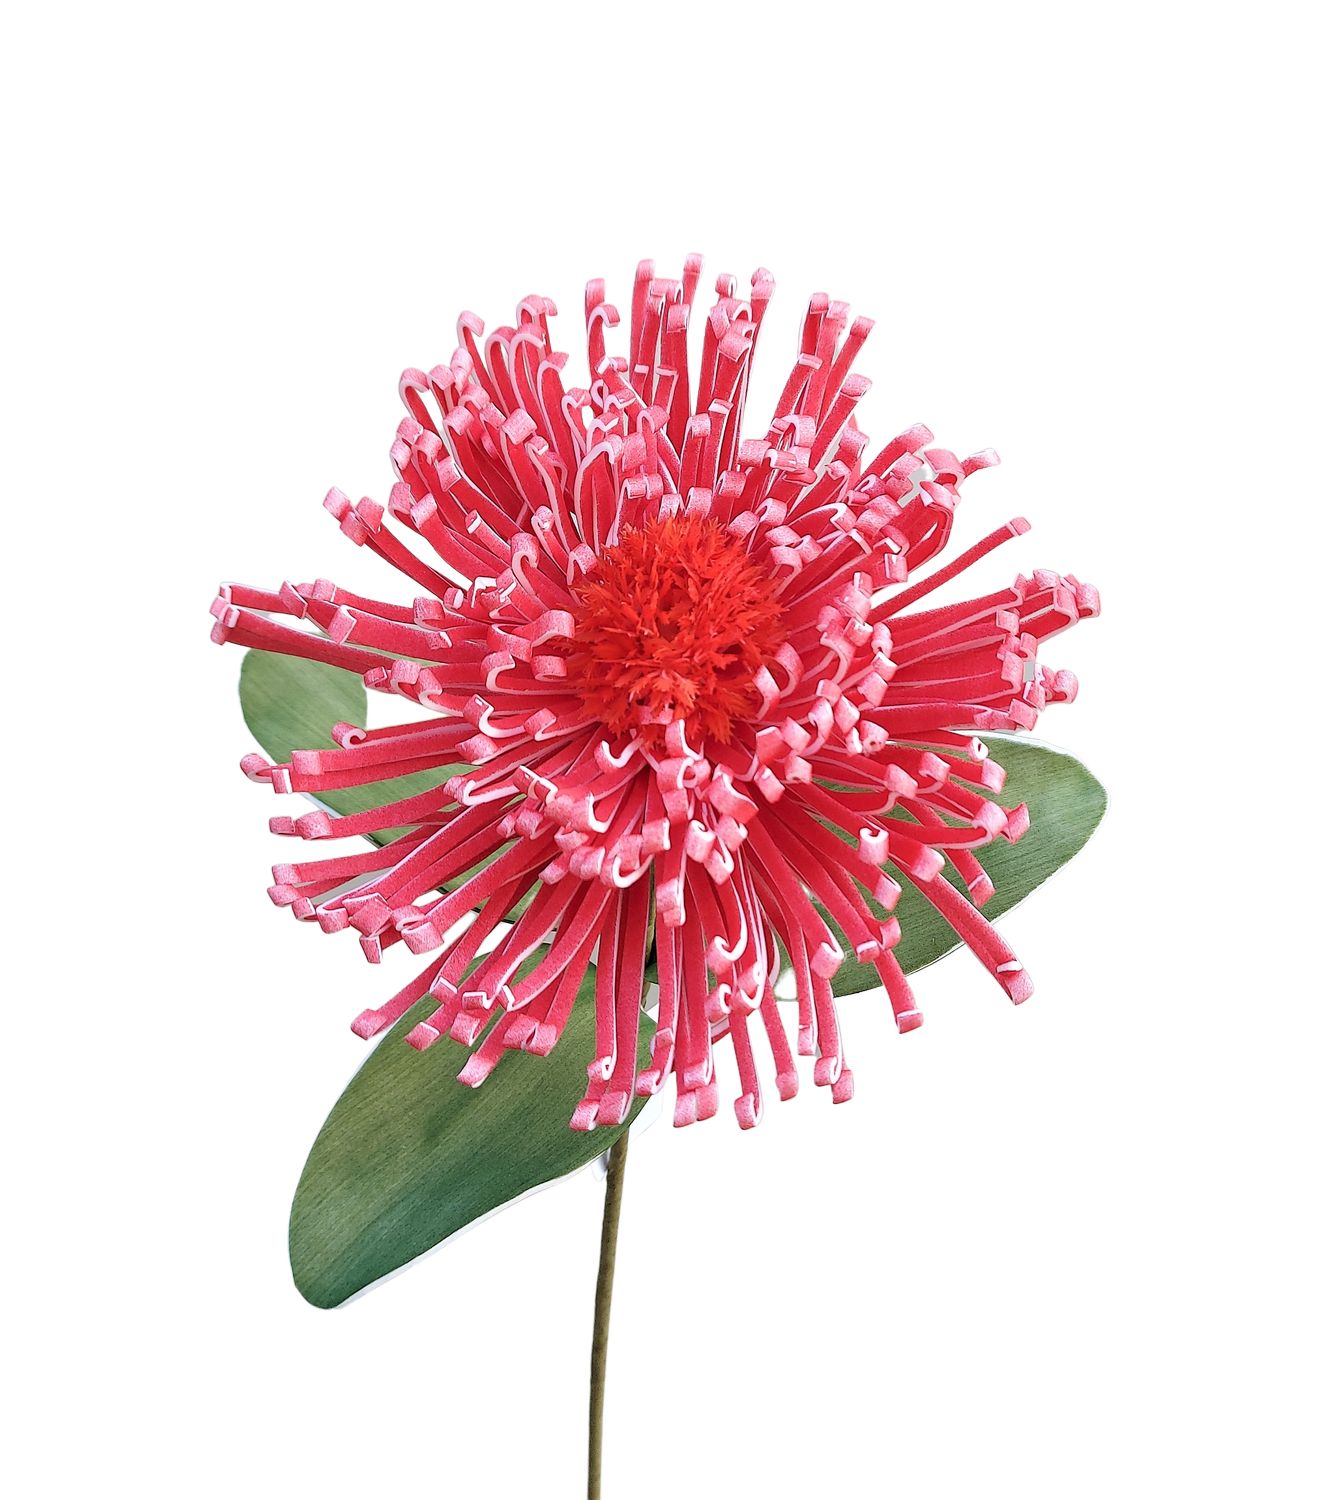 Deko Soft flower 'Nadelkissenprotea', 103 cm, purpurrot